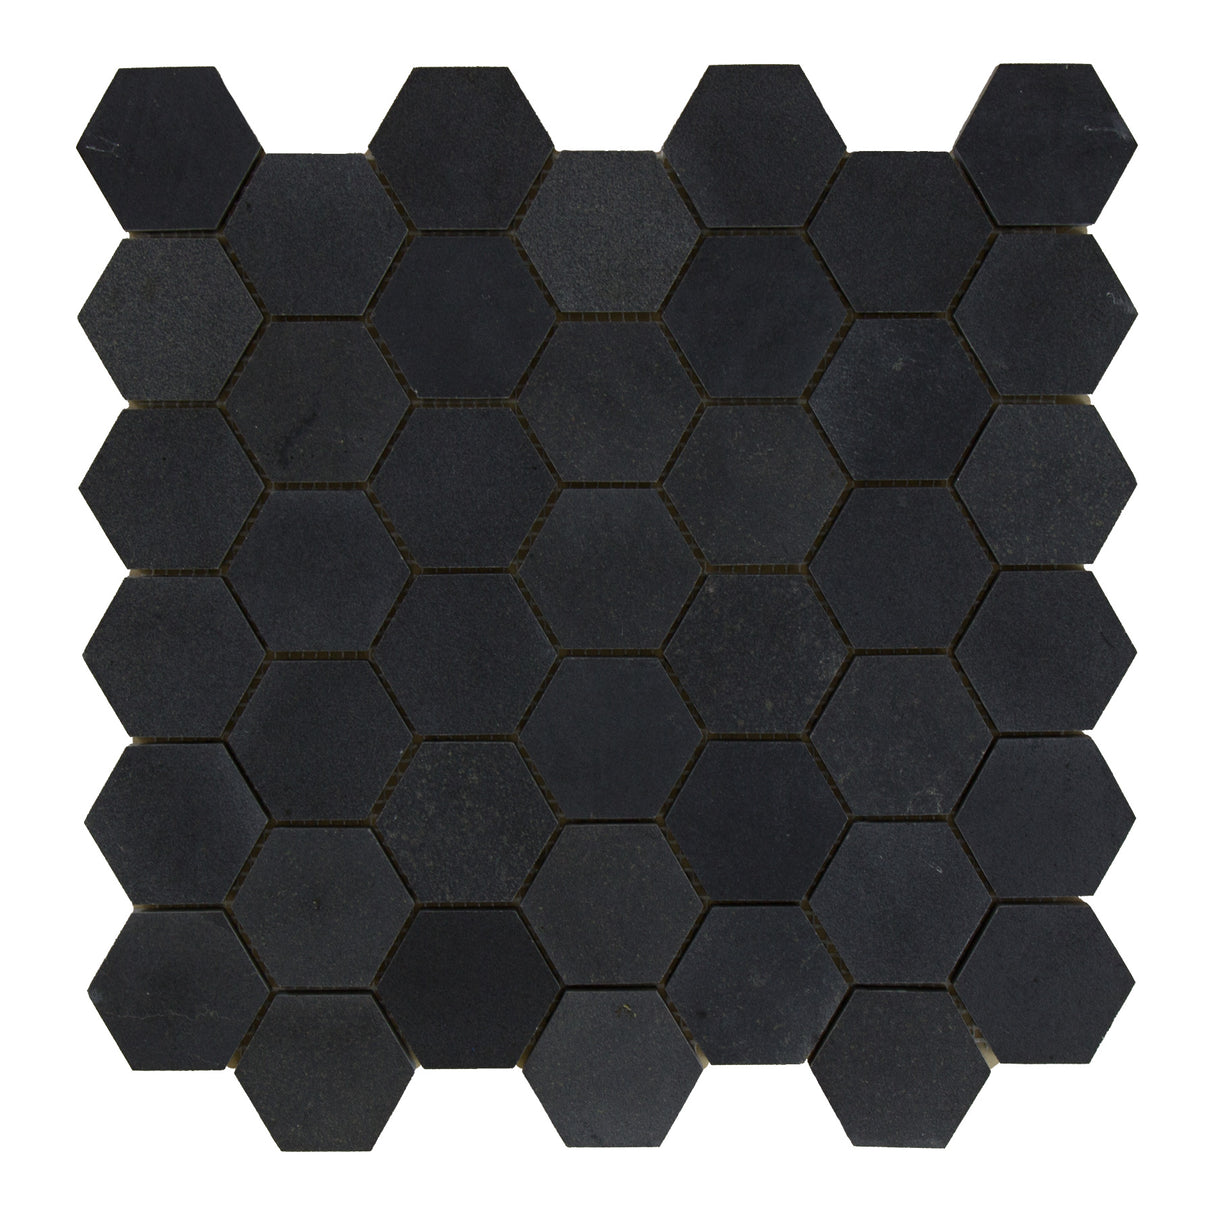 2x2 Basalt Black Honed Hexagon Mosaic